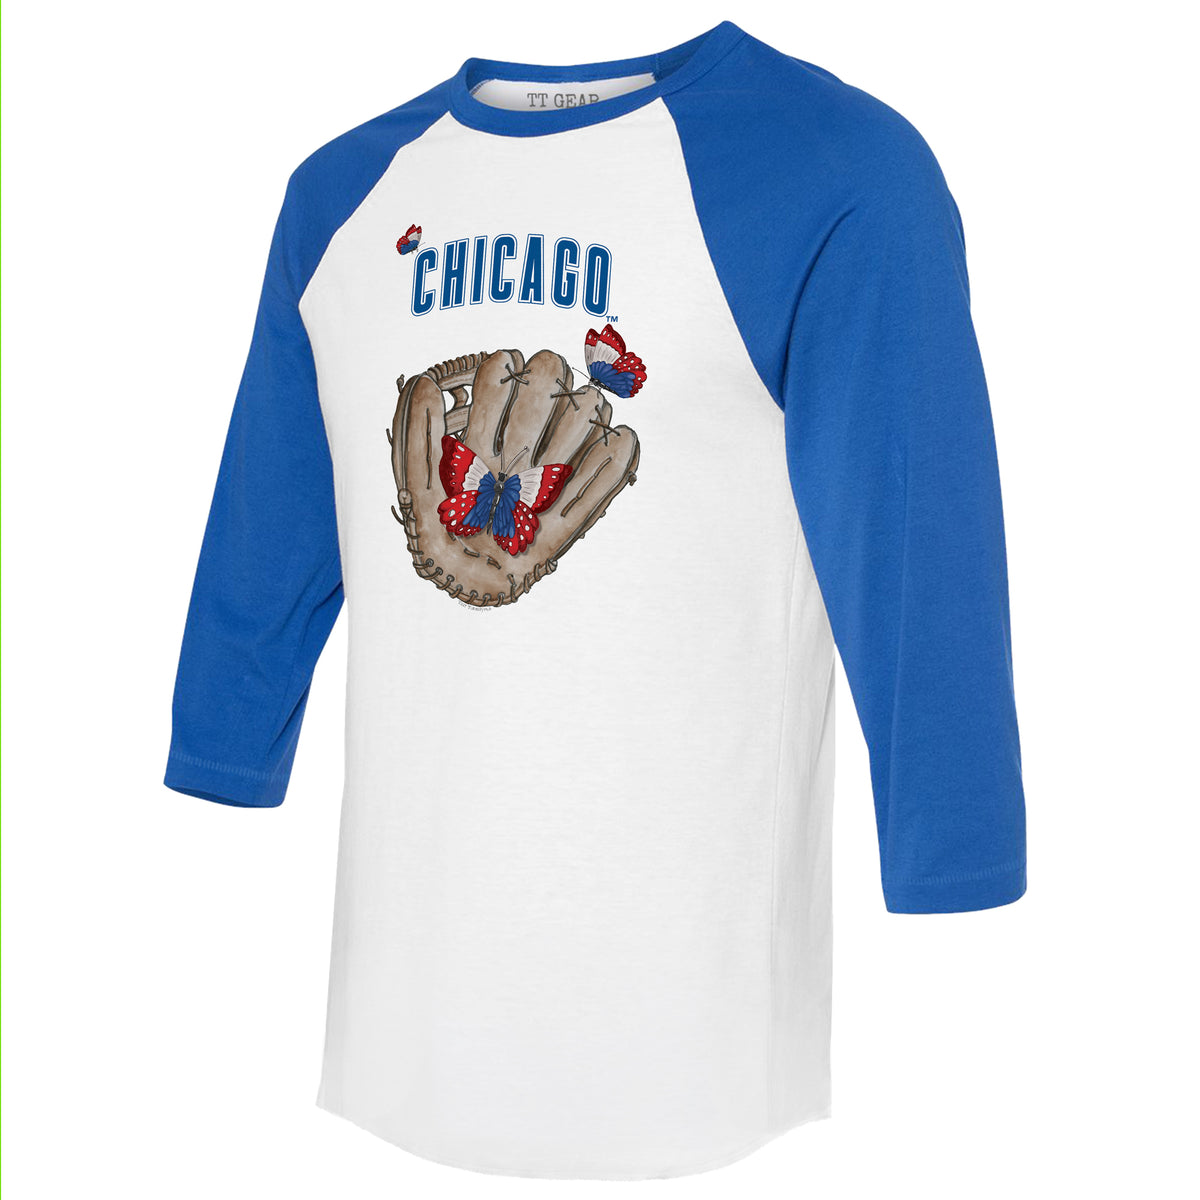 Chicago Cubs Butterfly Glove 3/4 Royal Blue Sleeve Raglan